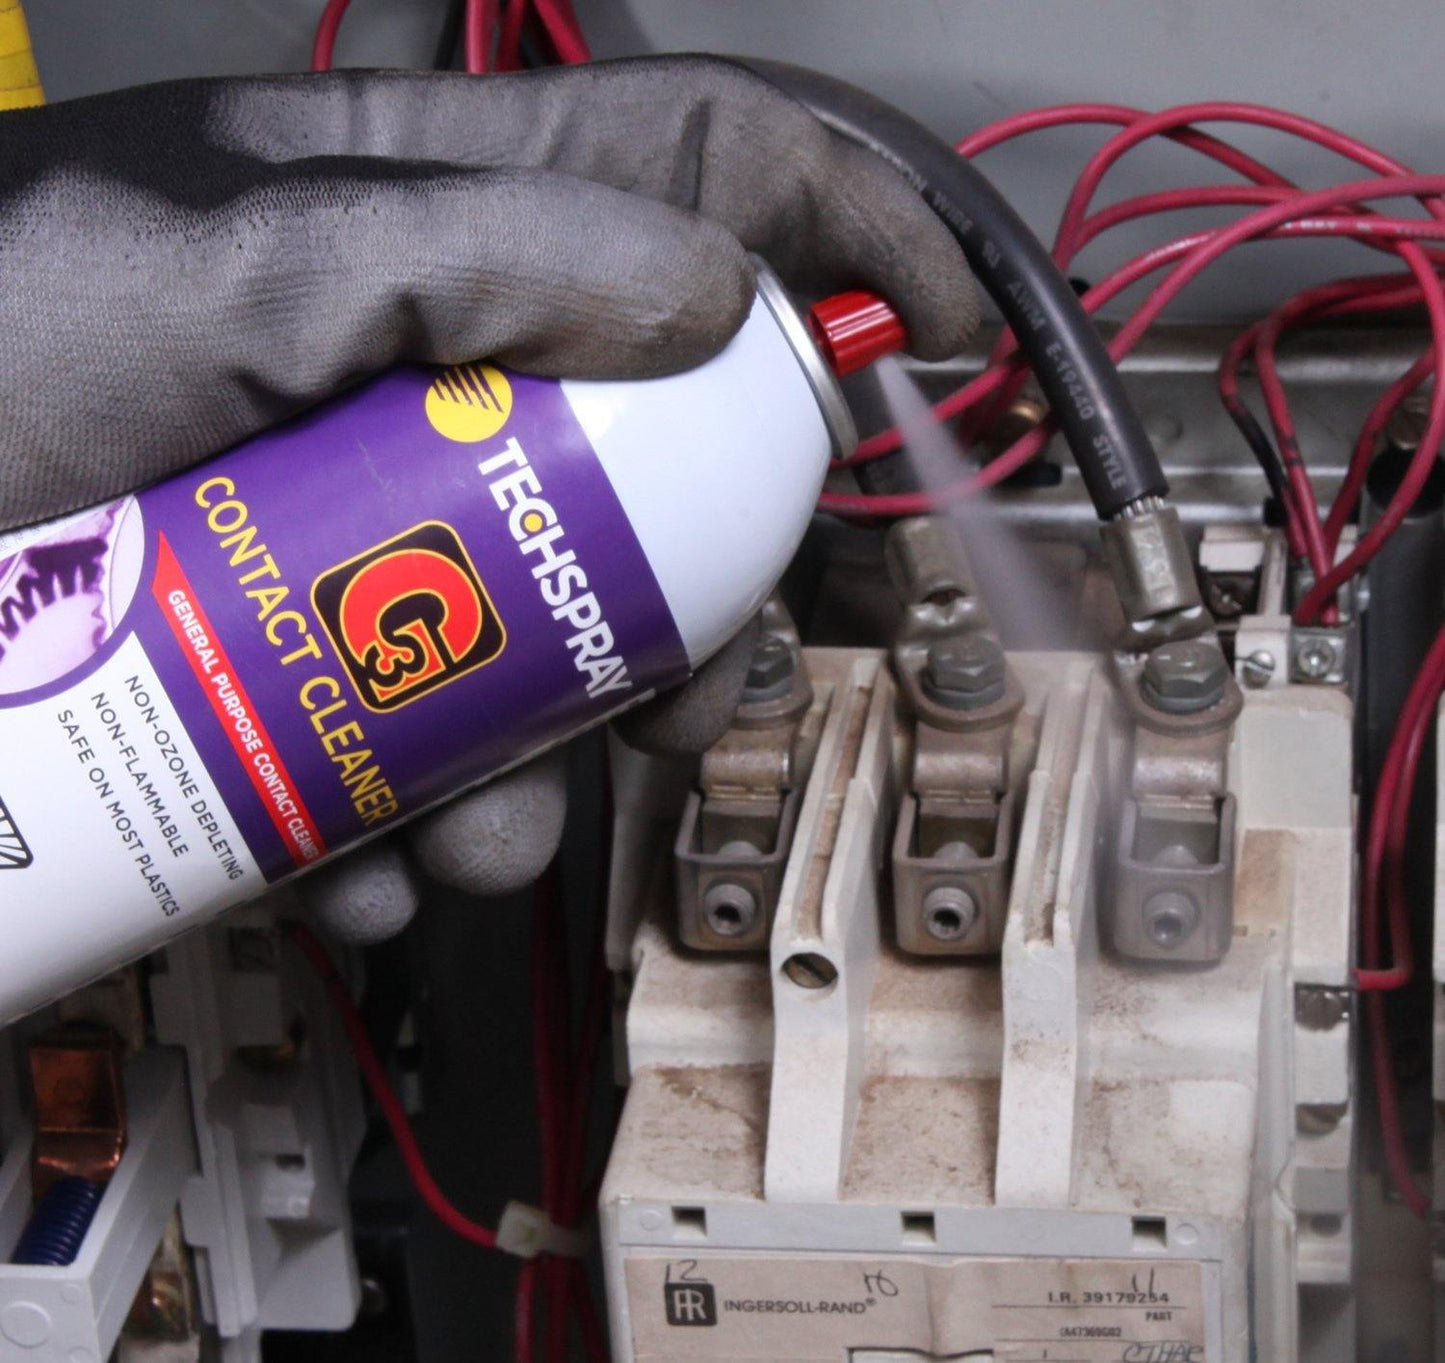 Techspray G3 Contact Cleaner aerosol can spray 16 oz / 454g